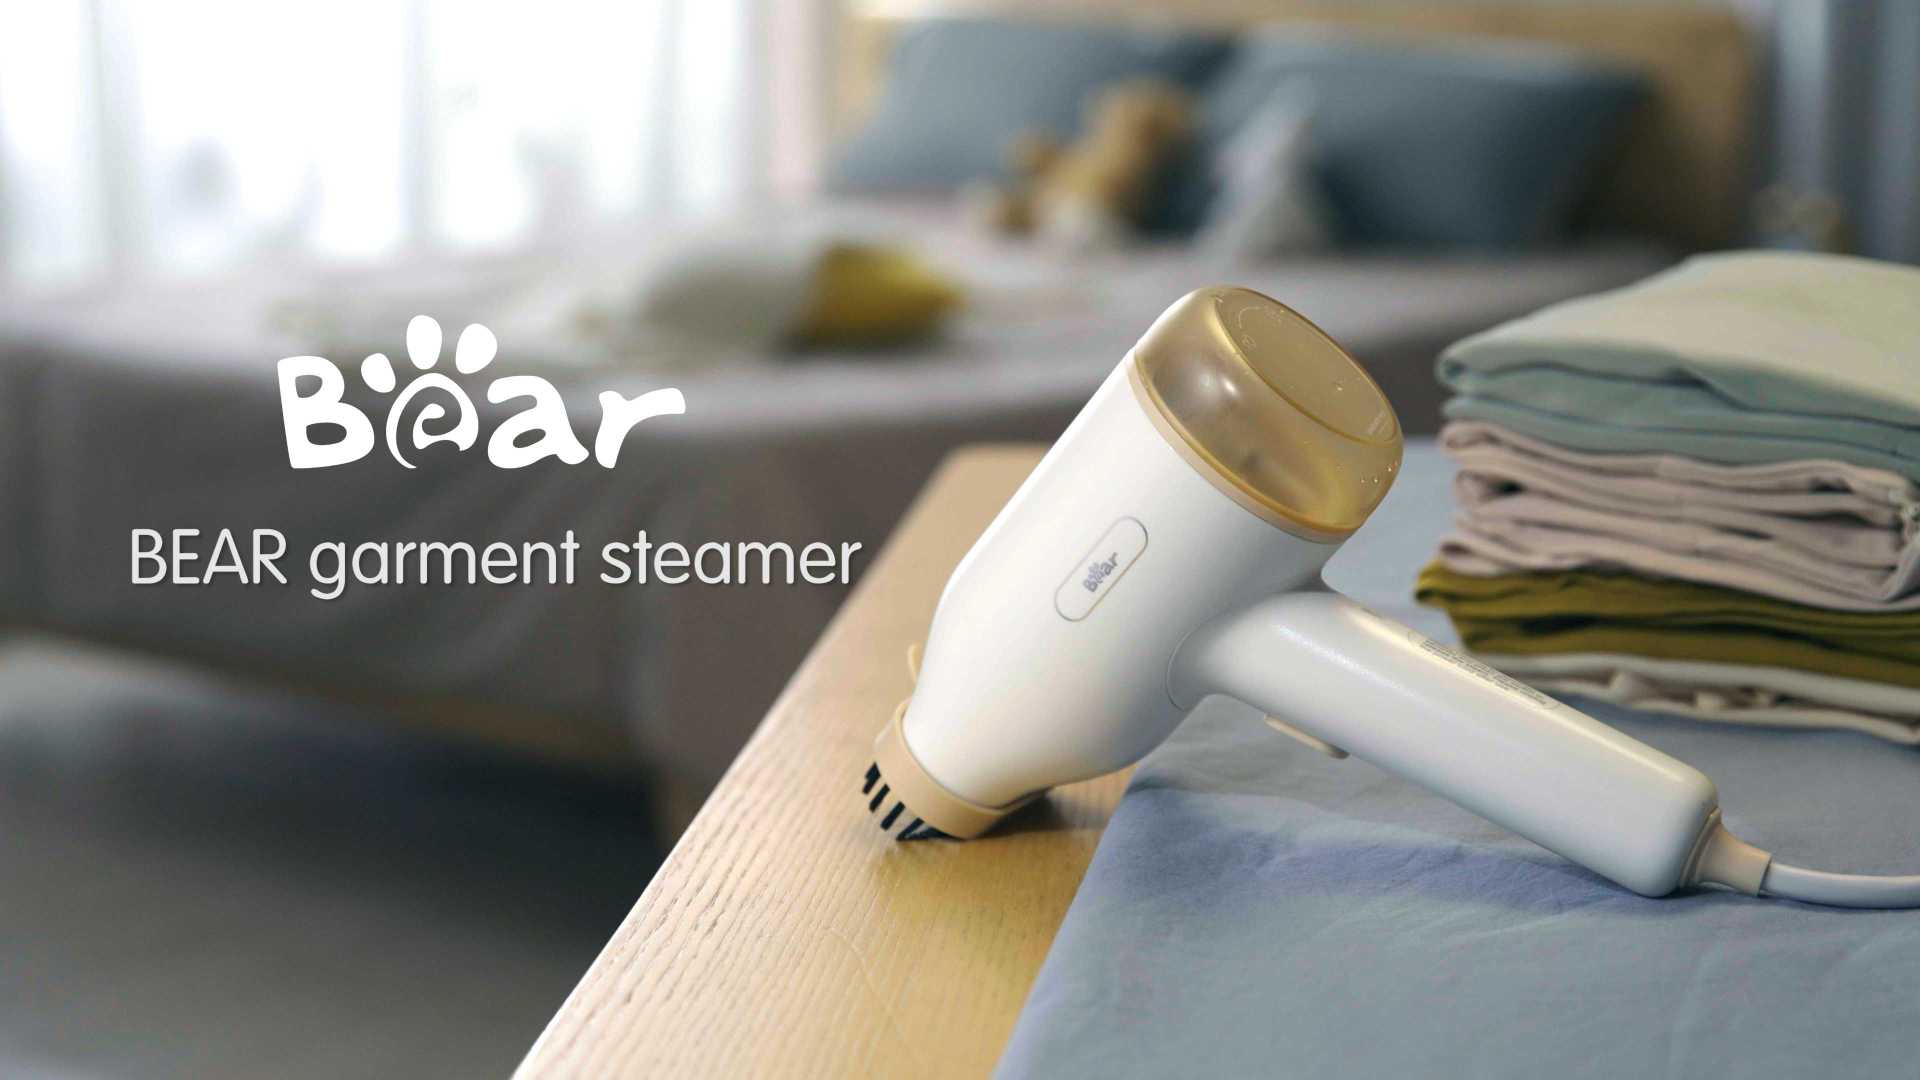 BEAR garment steamer